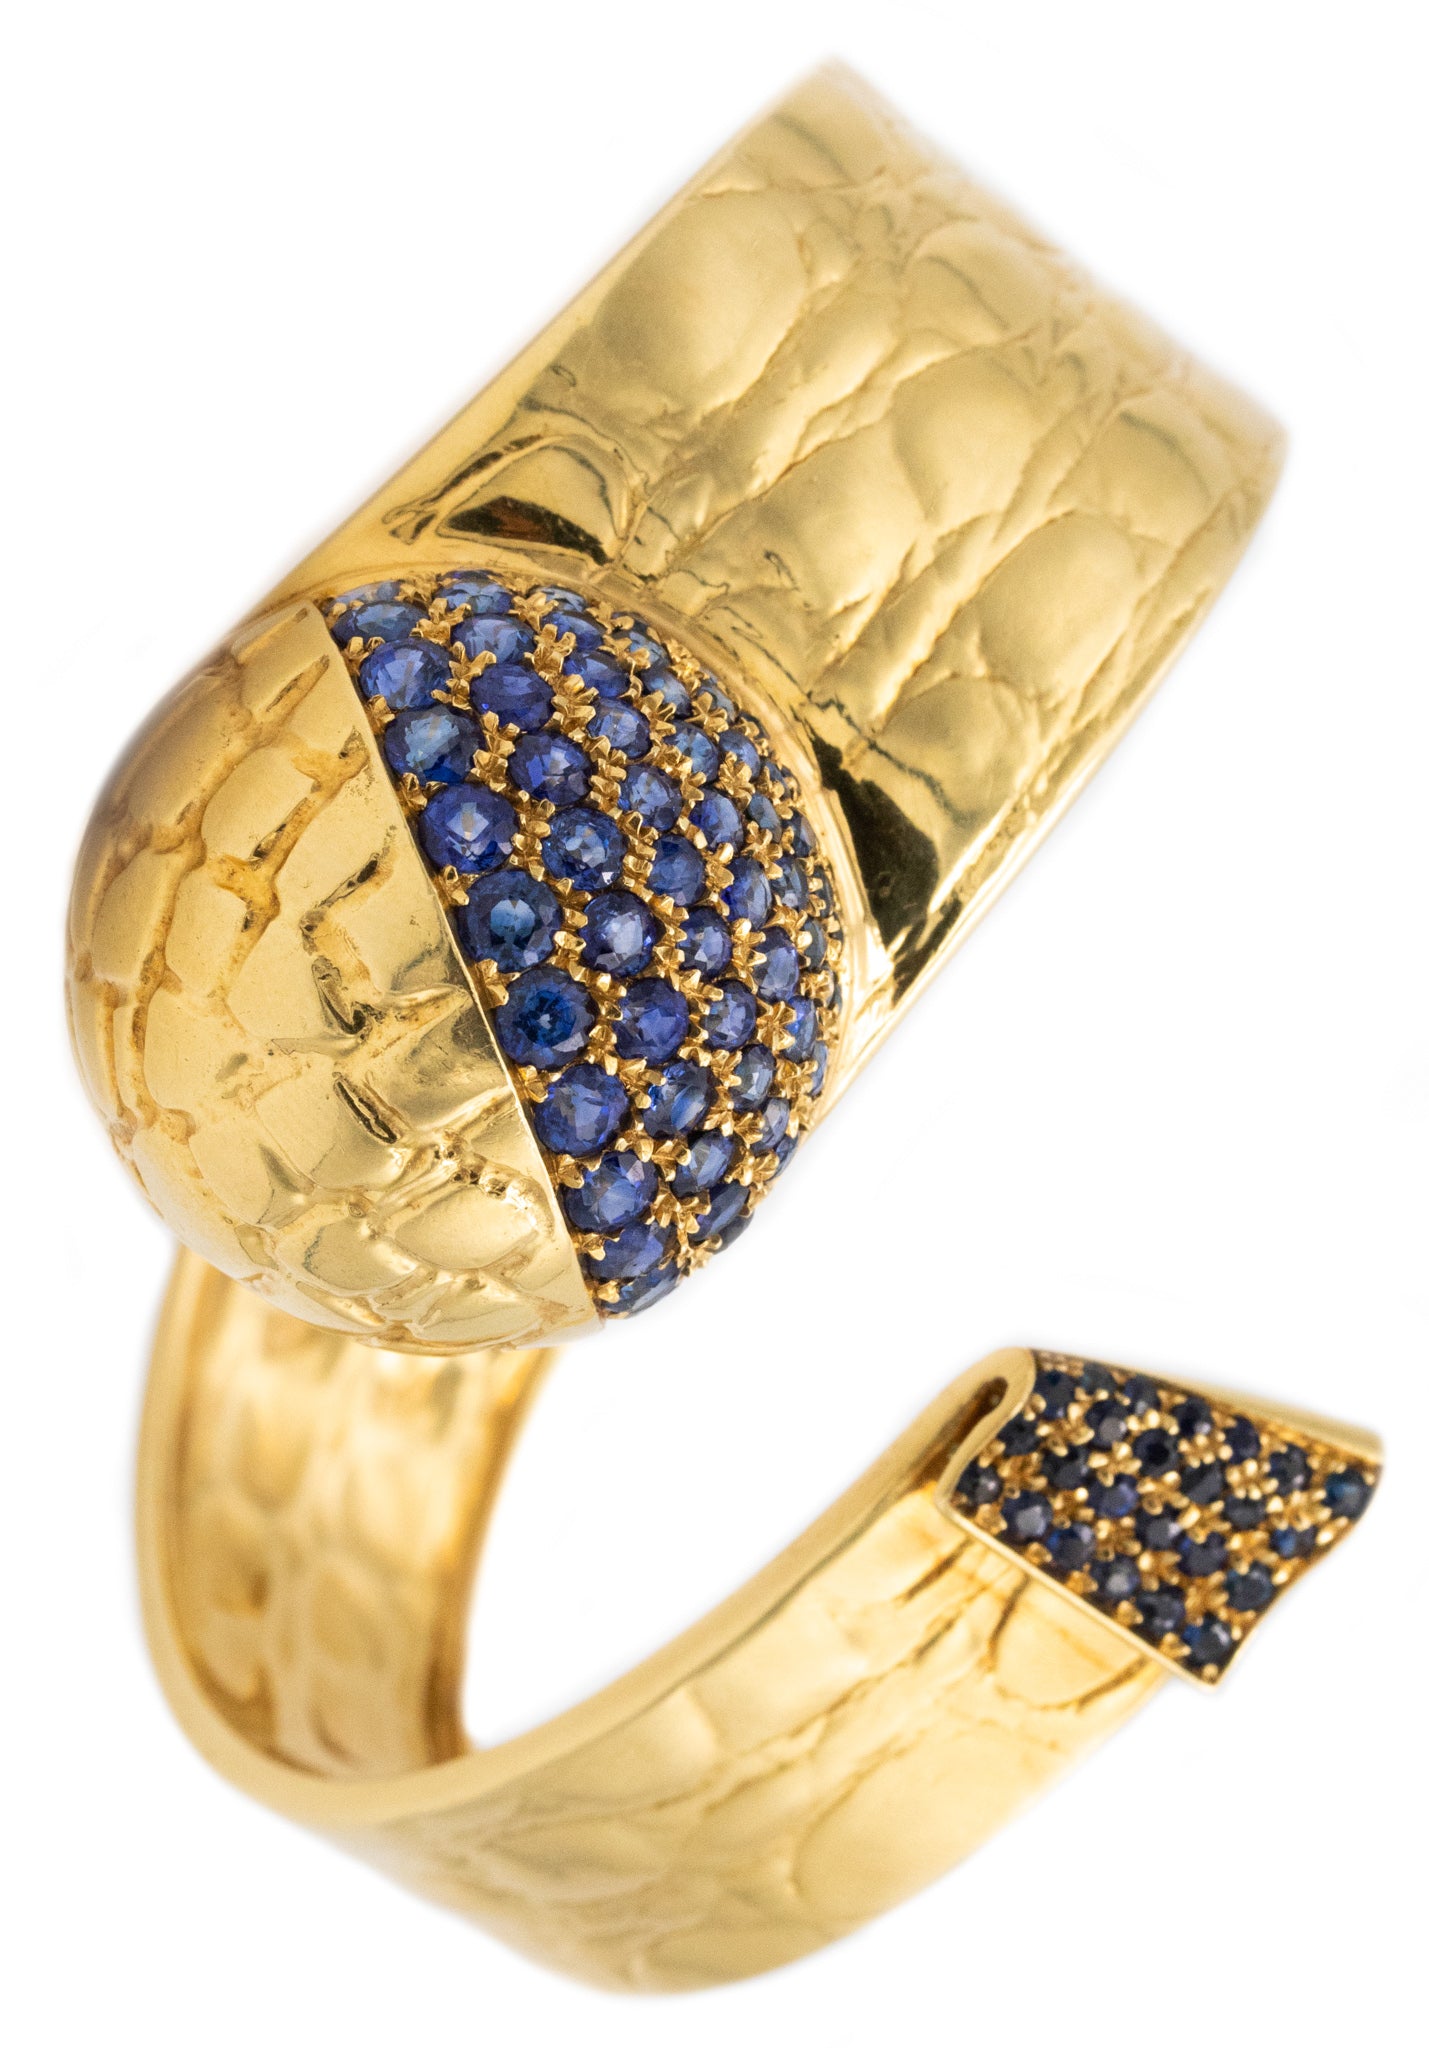 *Gucci 1970 Milan retro 18 kt yellow gold wrist-arm cuff with 8.96 Ctw of Ceylon sapphires